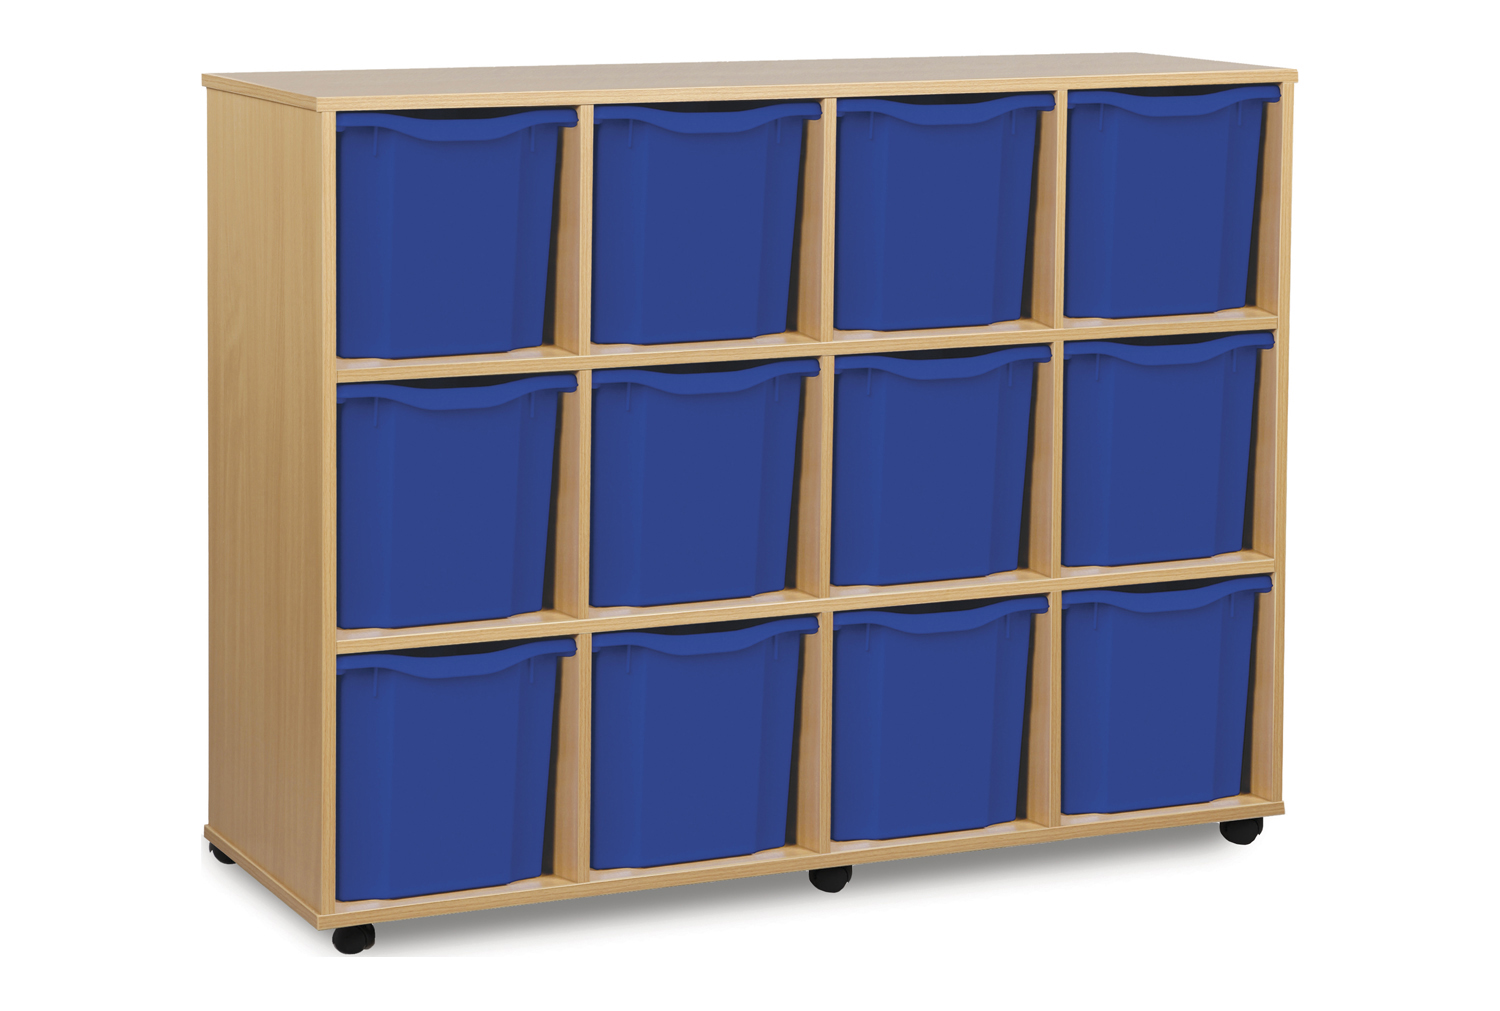 12 Jumbo Classroom Tray Storage Unit, Red/Blue/Green/Yellow Classroom Trays